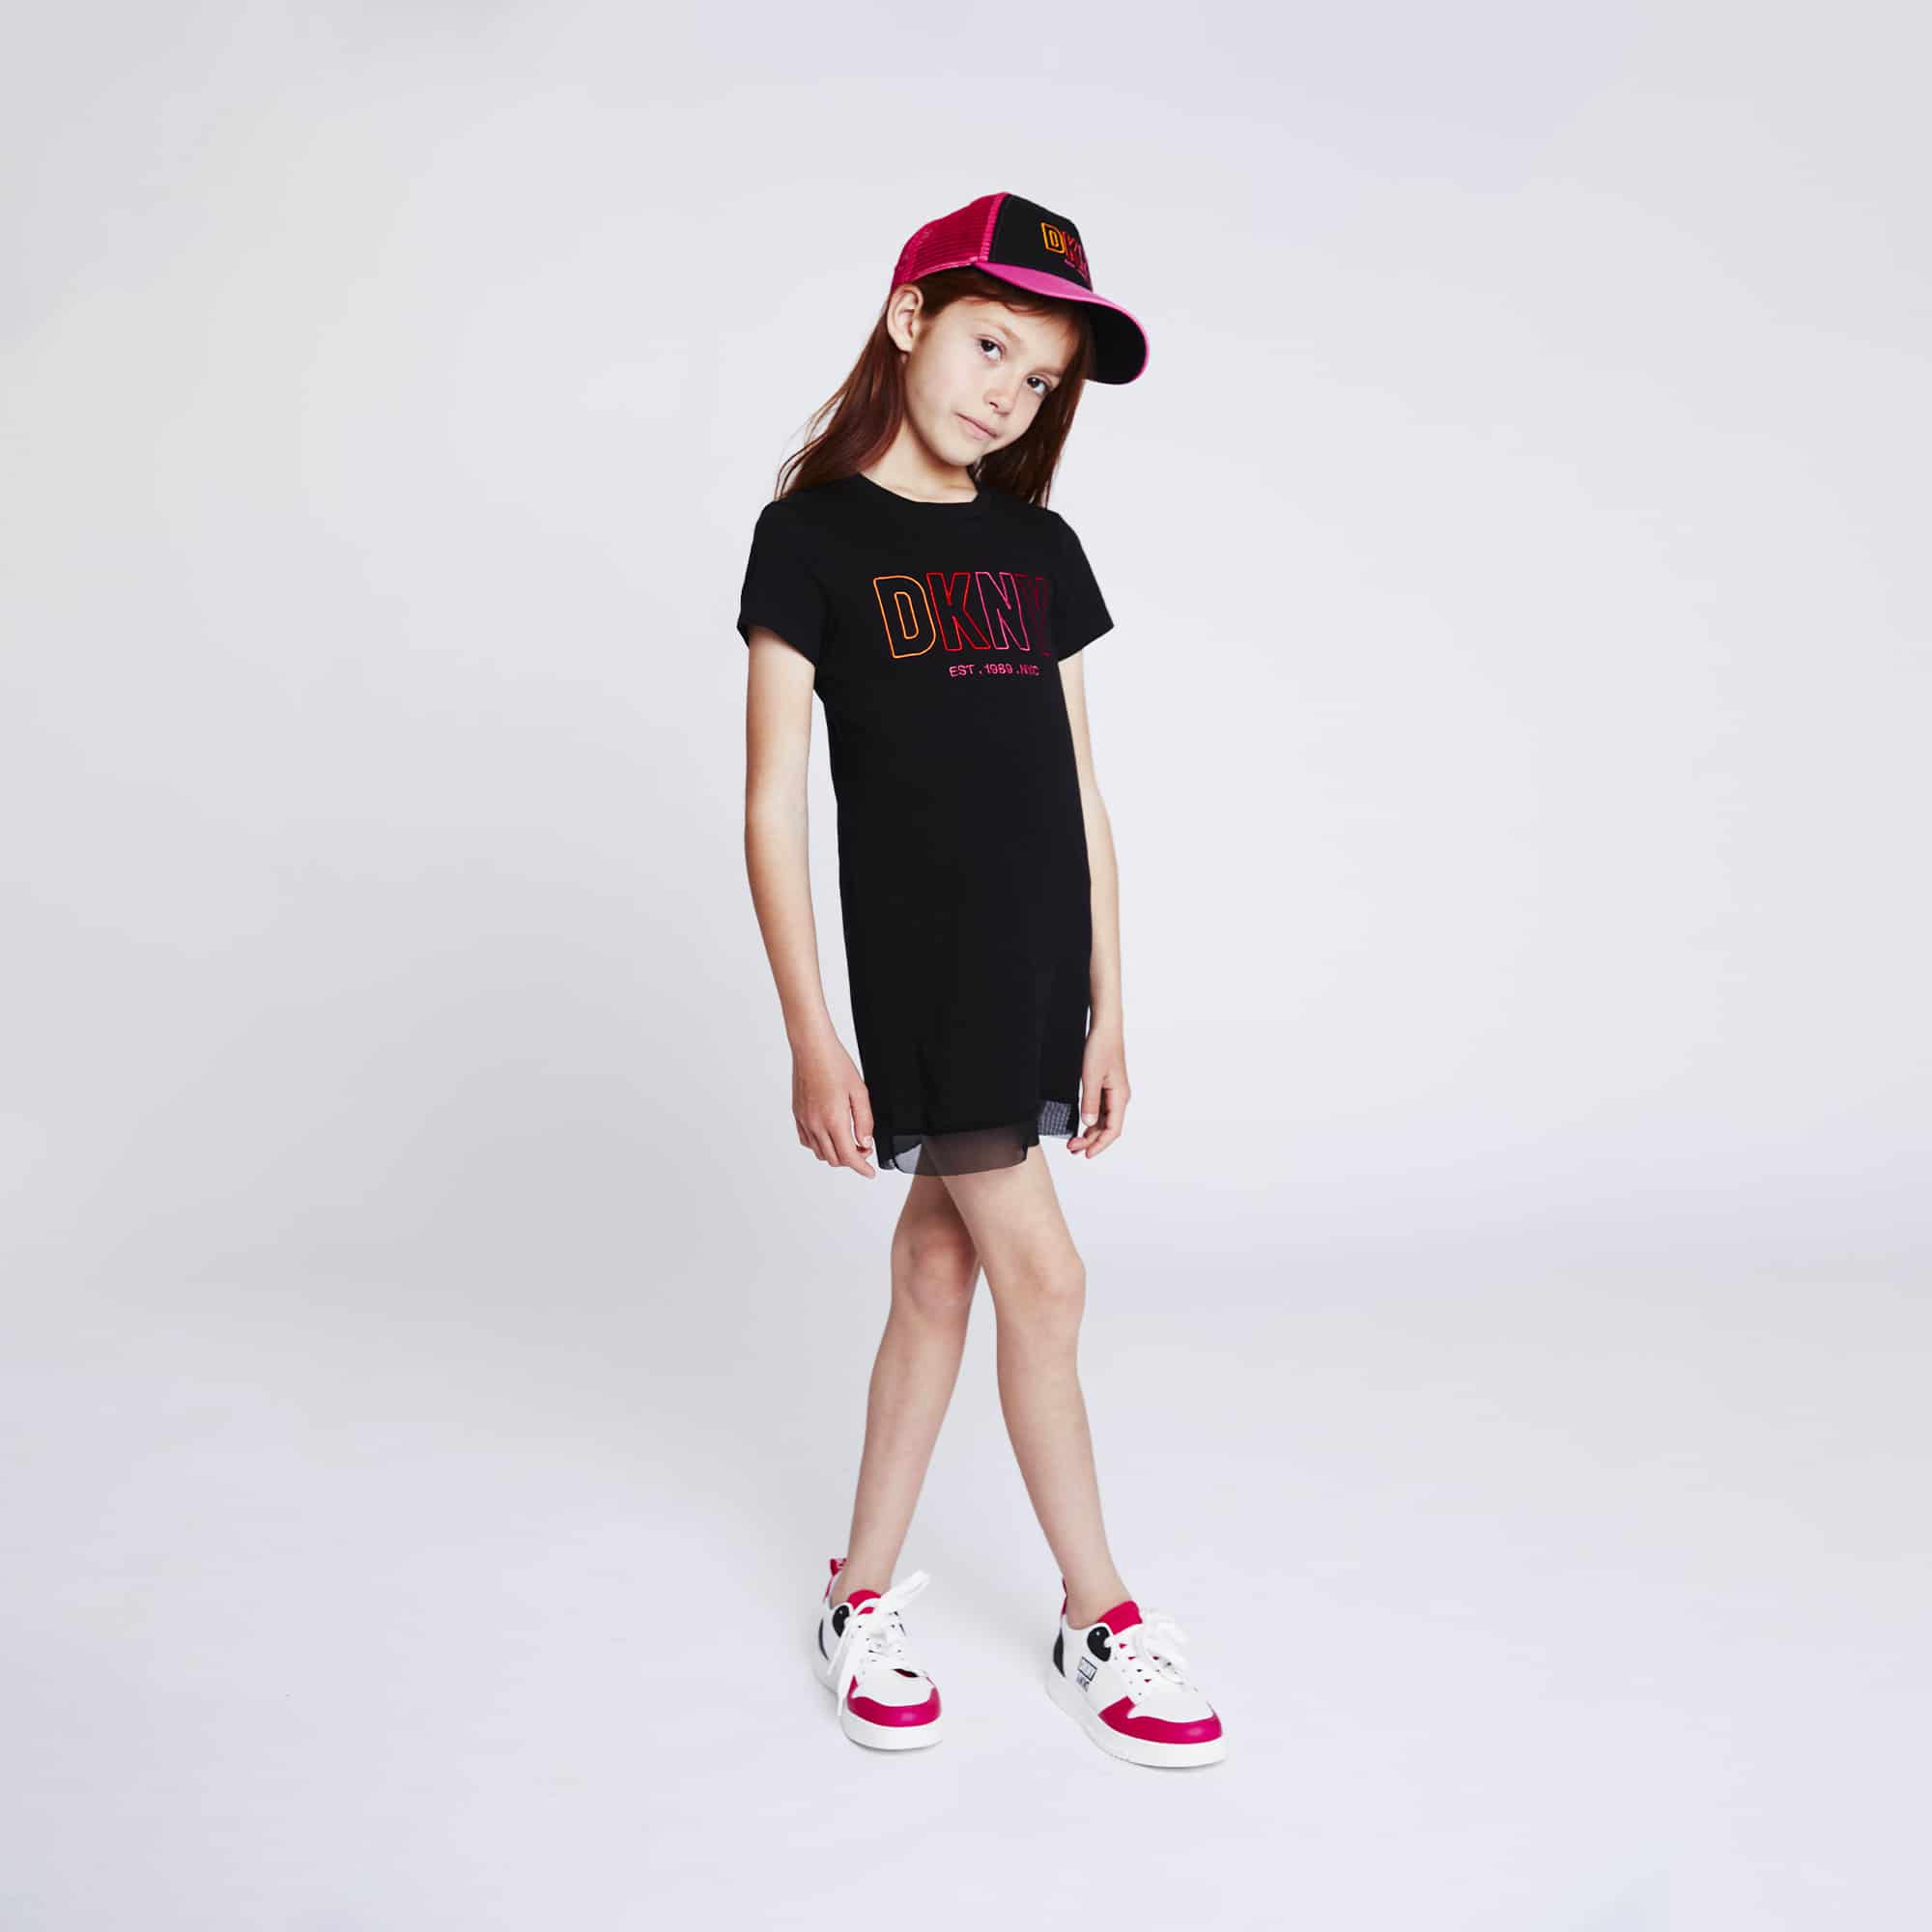 DKNY girls model in black dress and baseball cap